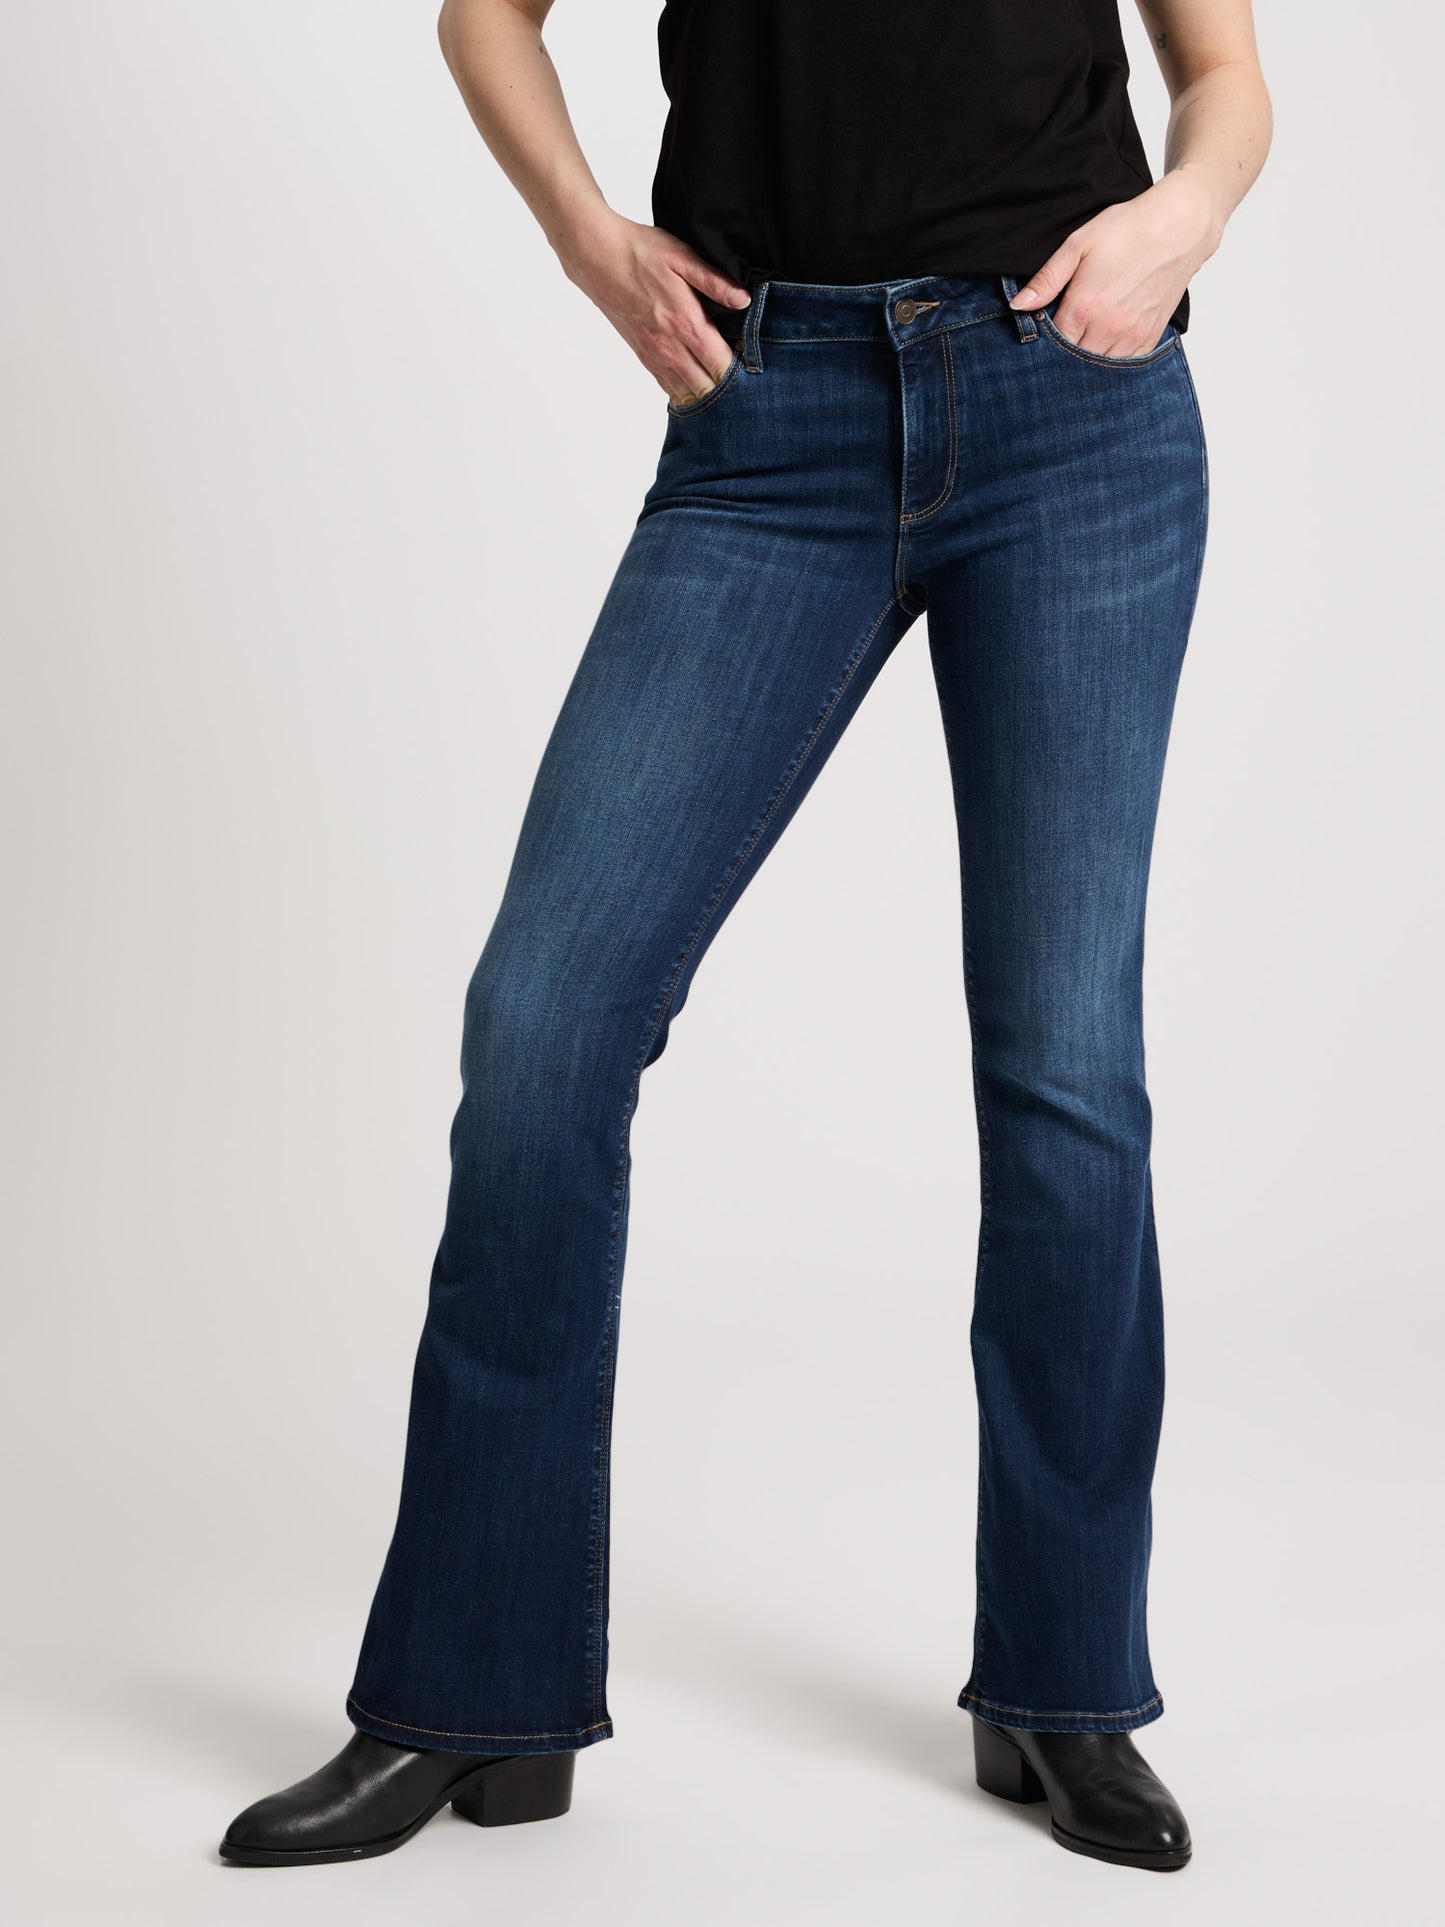 Faye women's jeans slim fit high waist flare leg dark blue